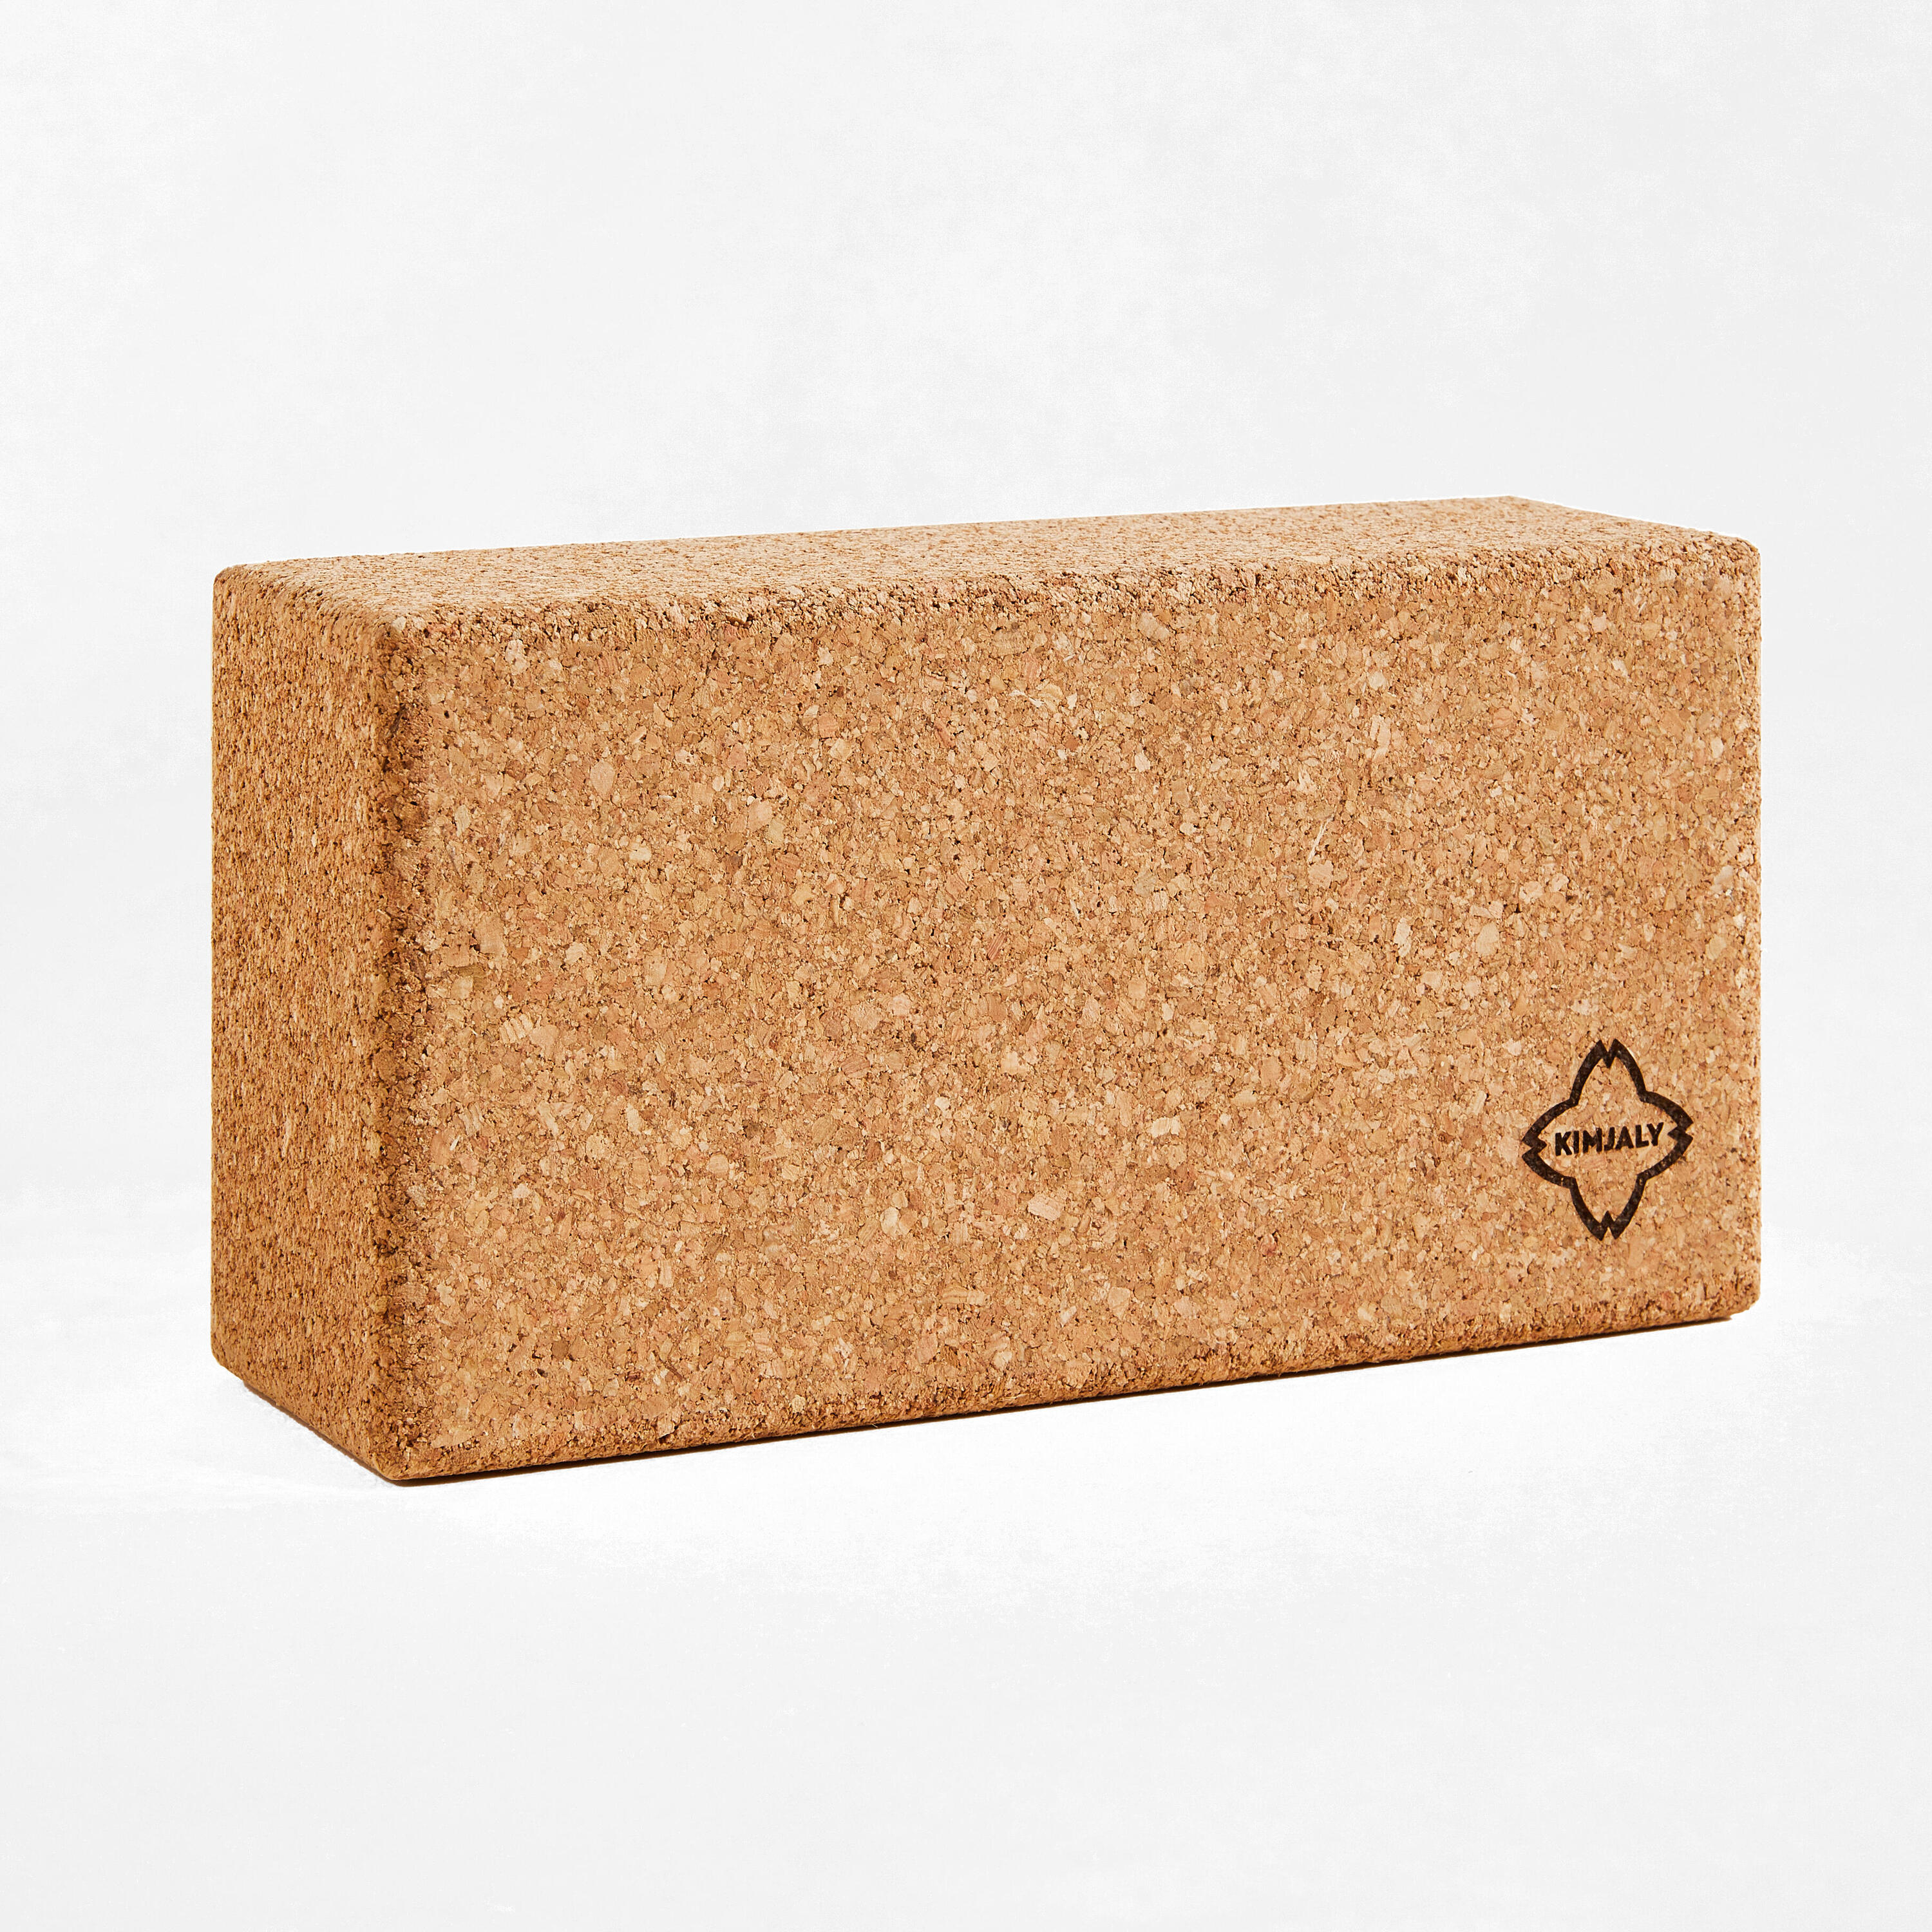 KIMJALY Cork Yoga Brick